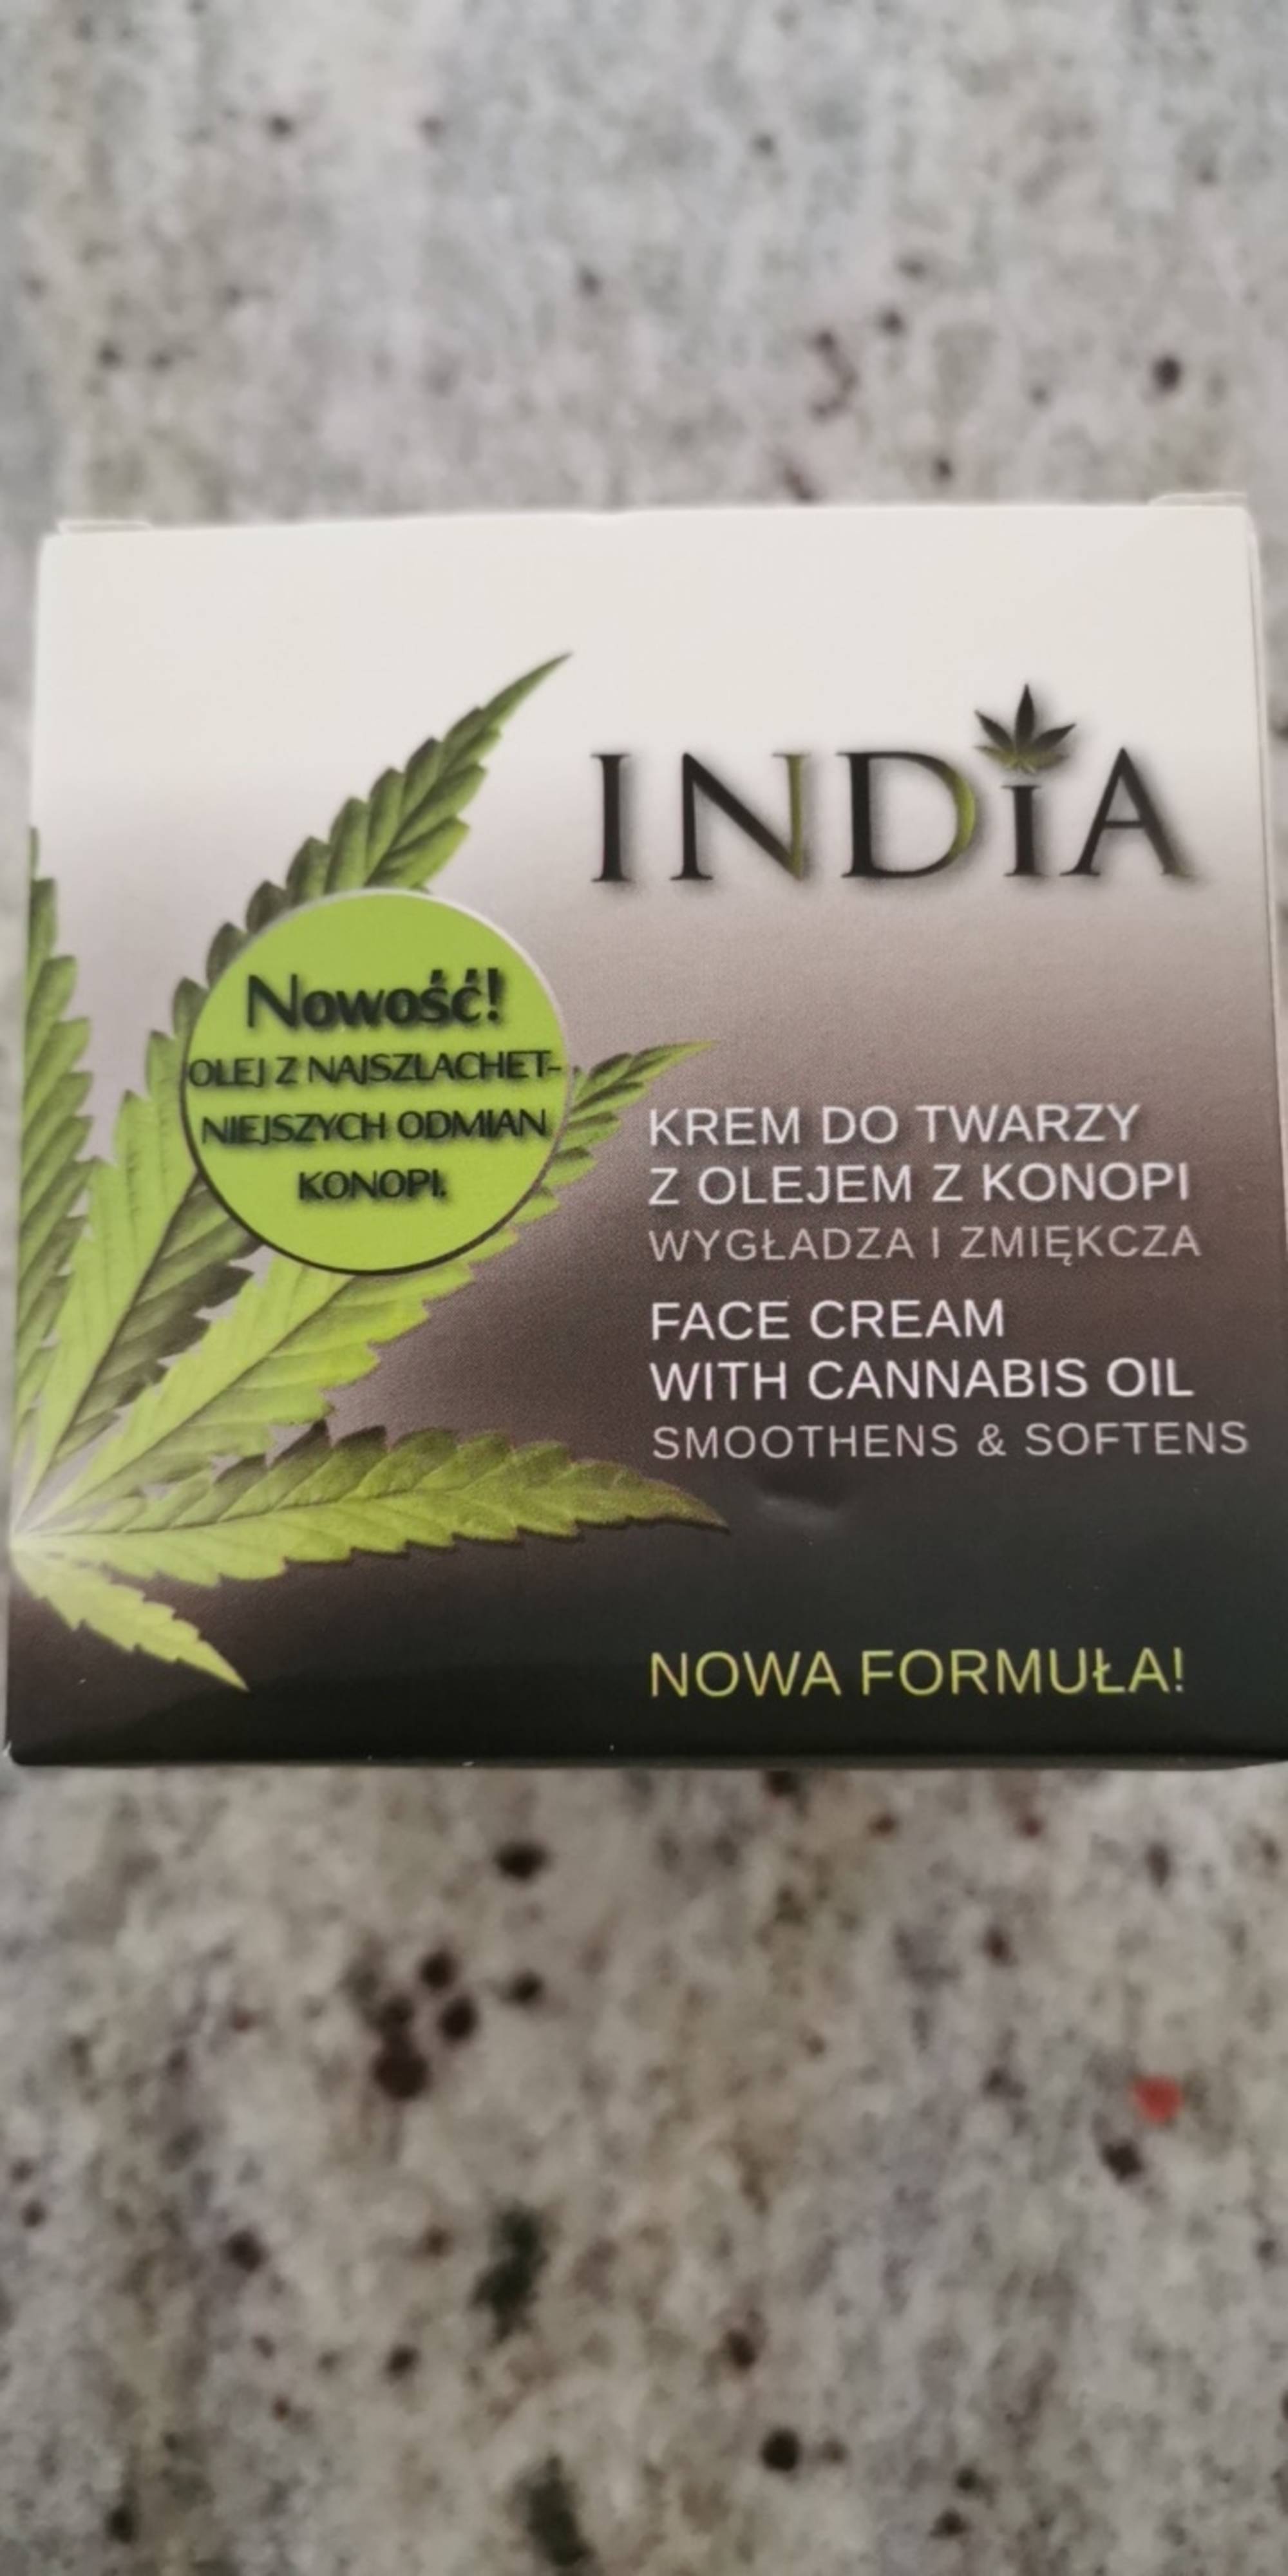 INDIA - Face cream with cannabis oil